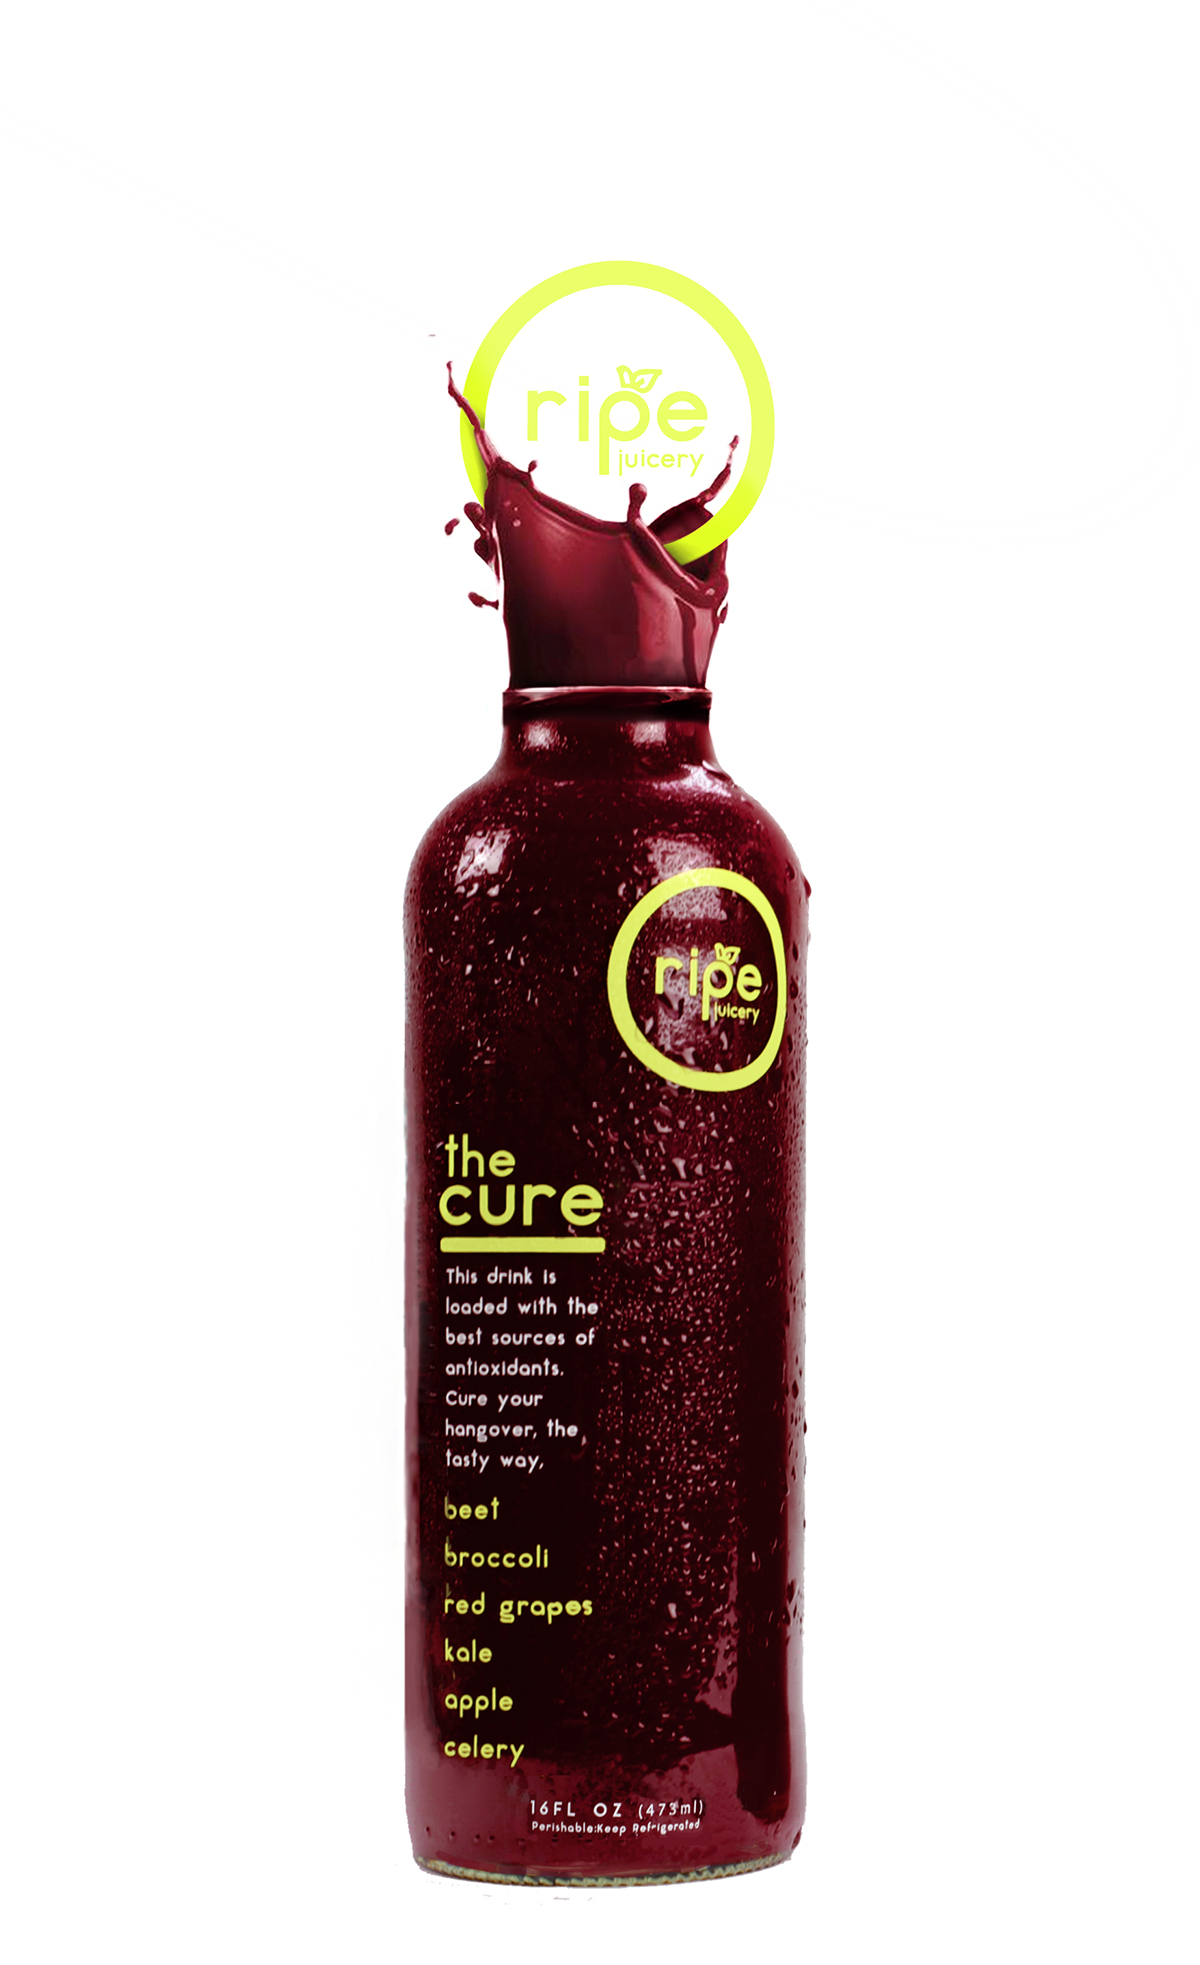 Adobe Portfolio juice juicery Juice Packaging ripe juicery bottle logo Icon identity minimal modern splash color